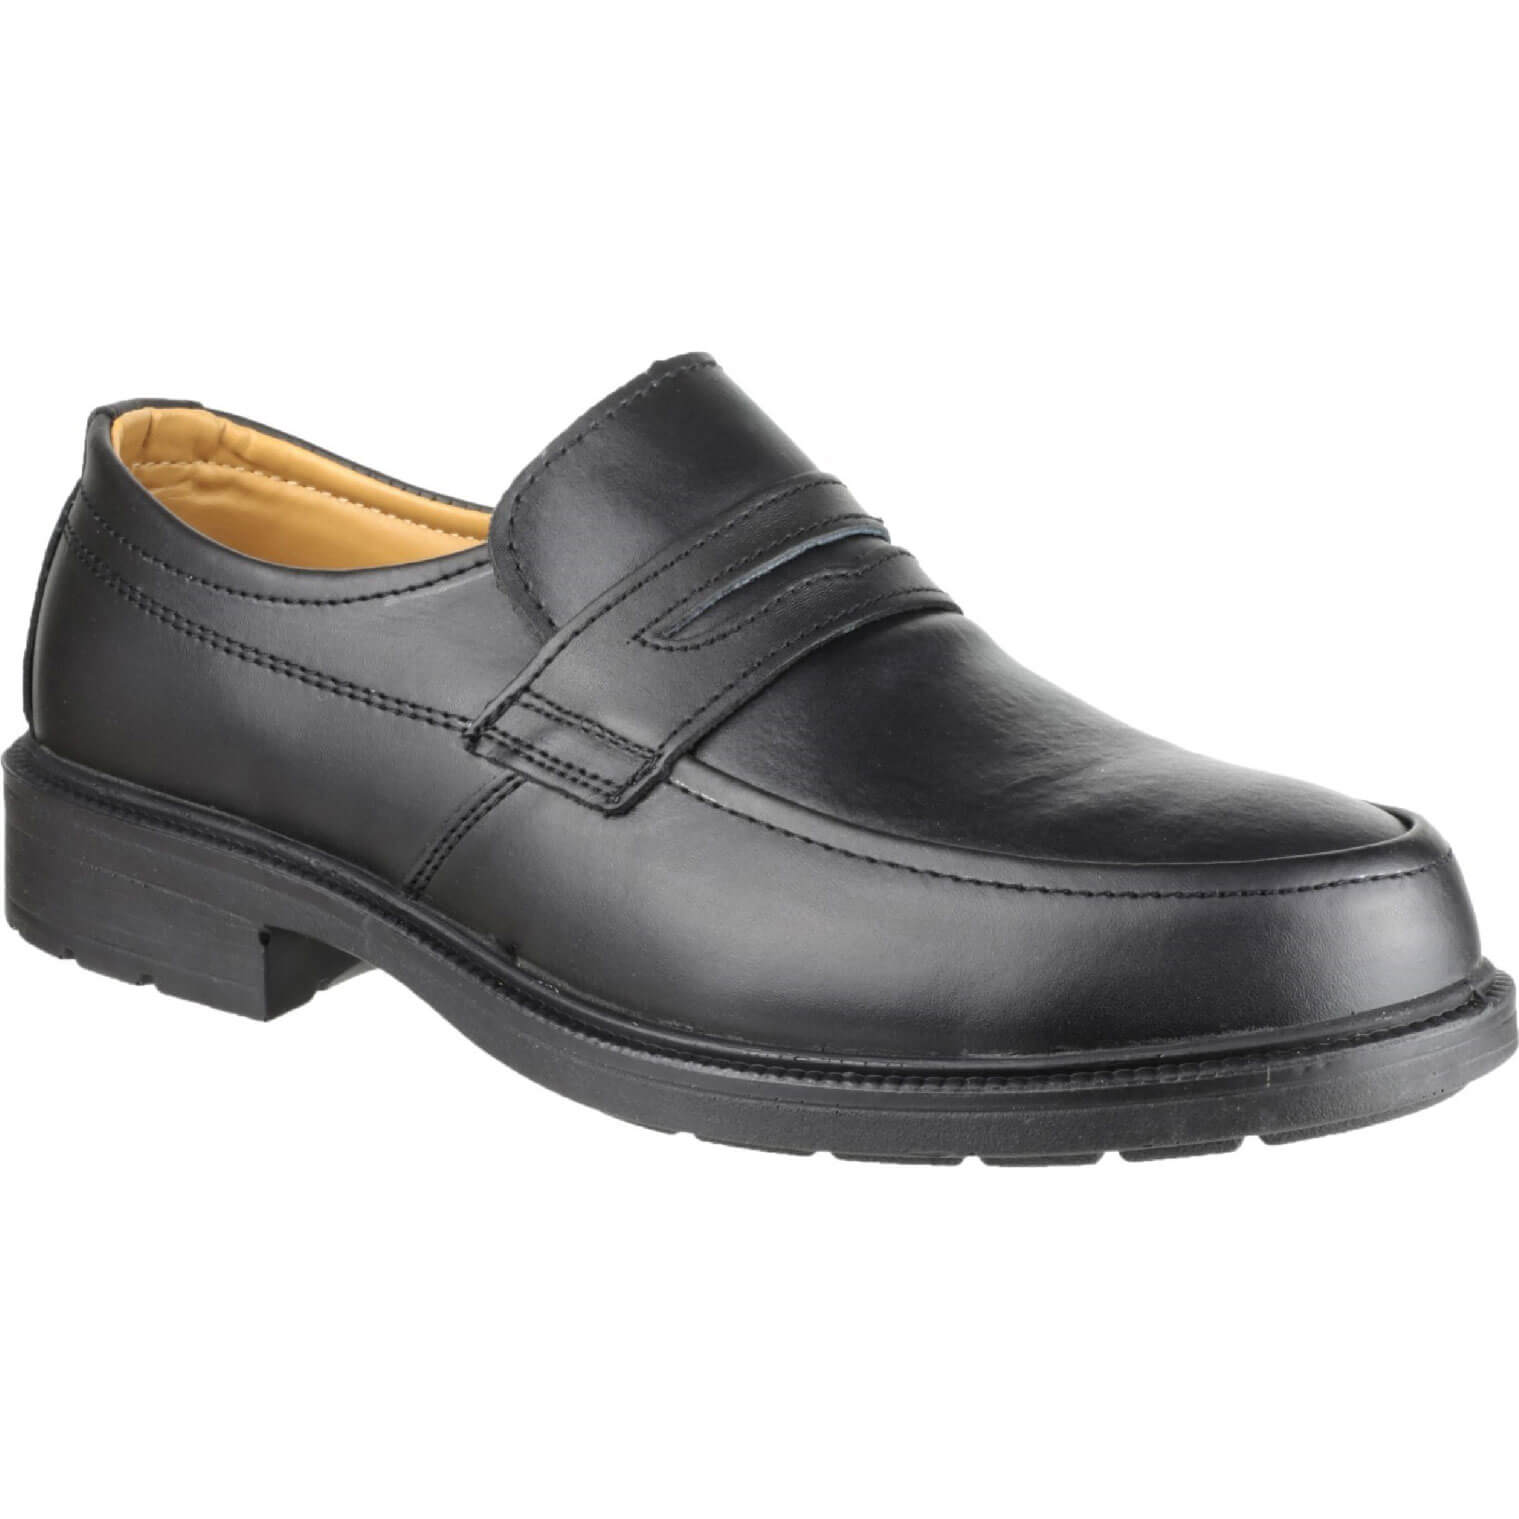 Image of Amblers Safety FS46 Safety Slip On Shoe Black Size 10